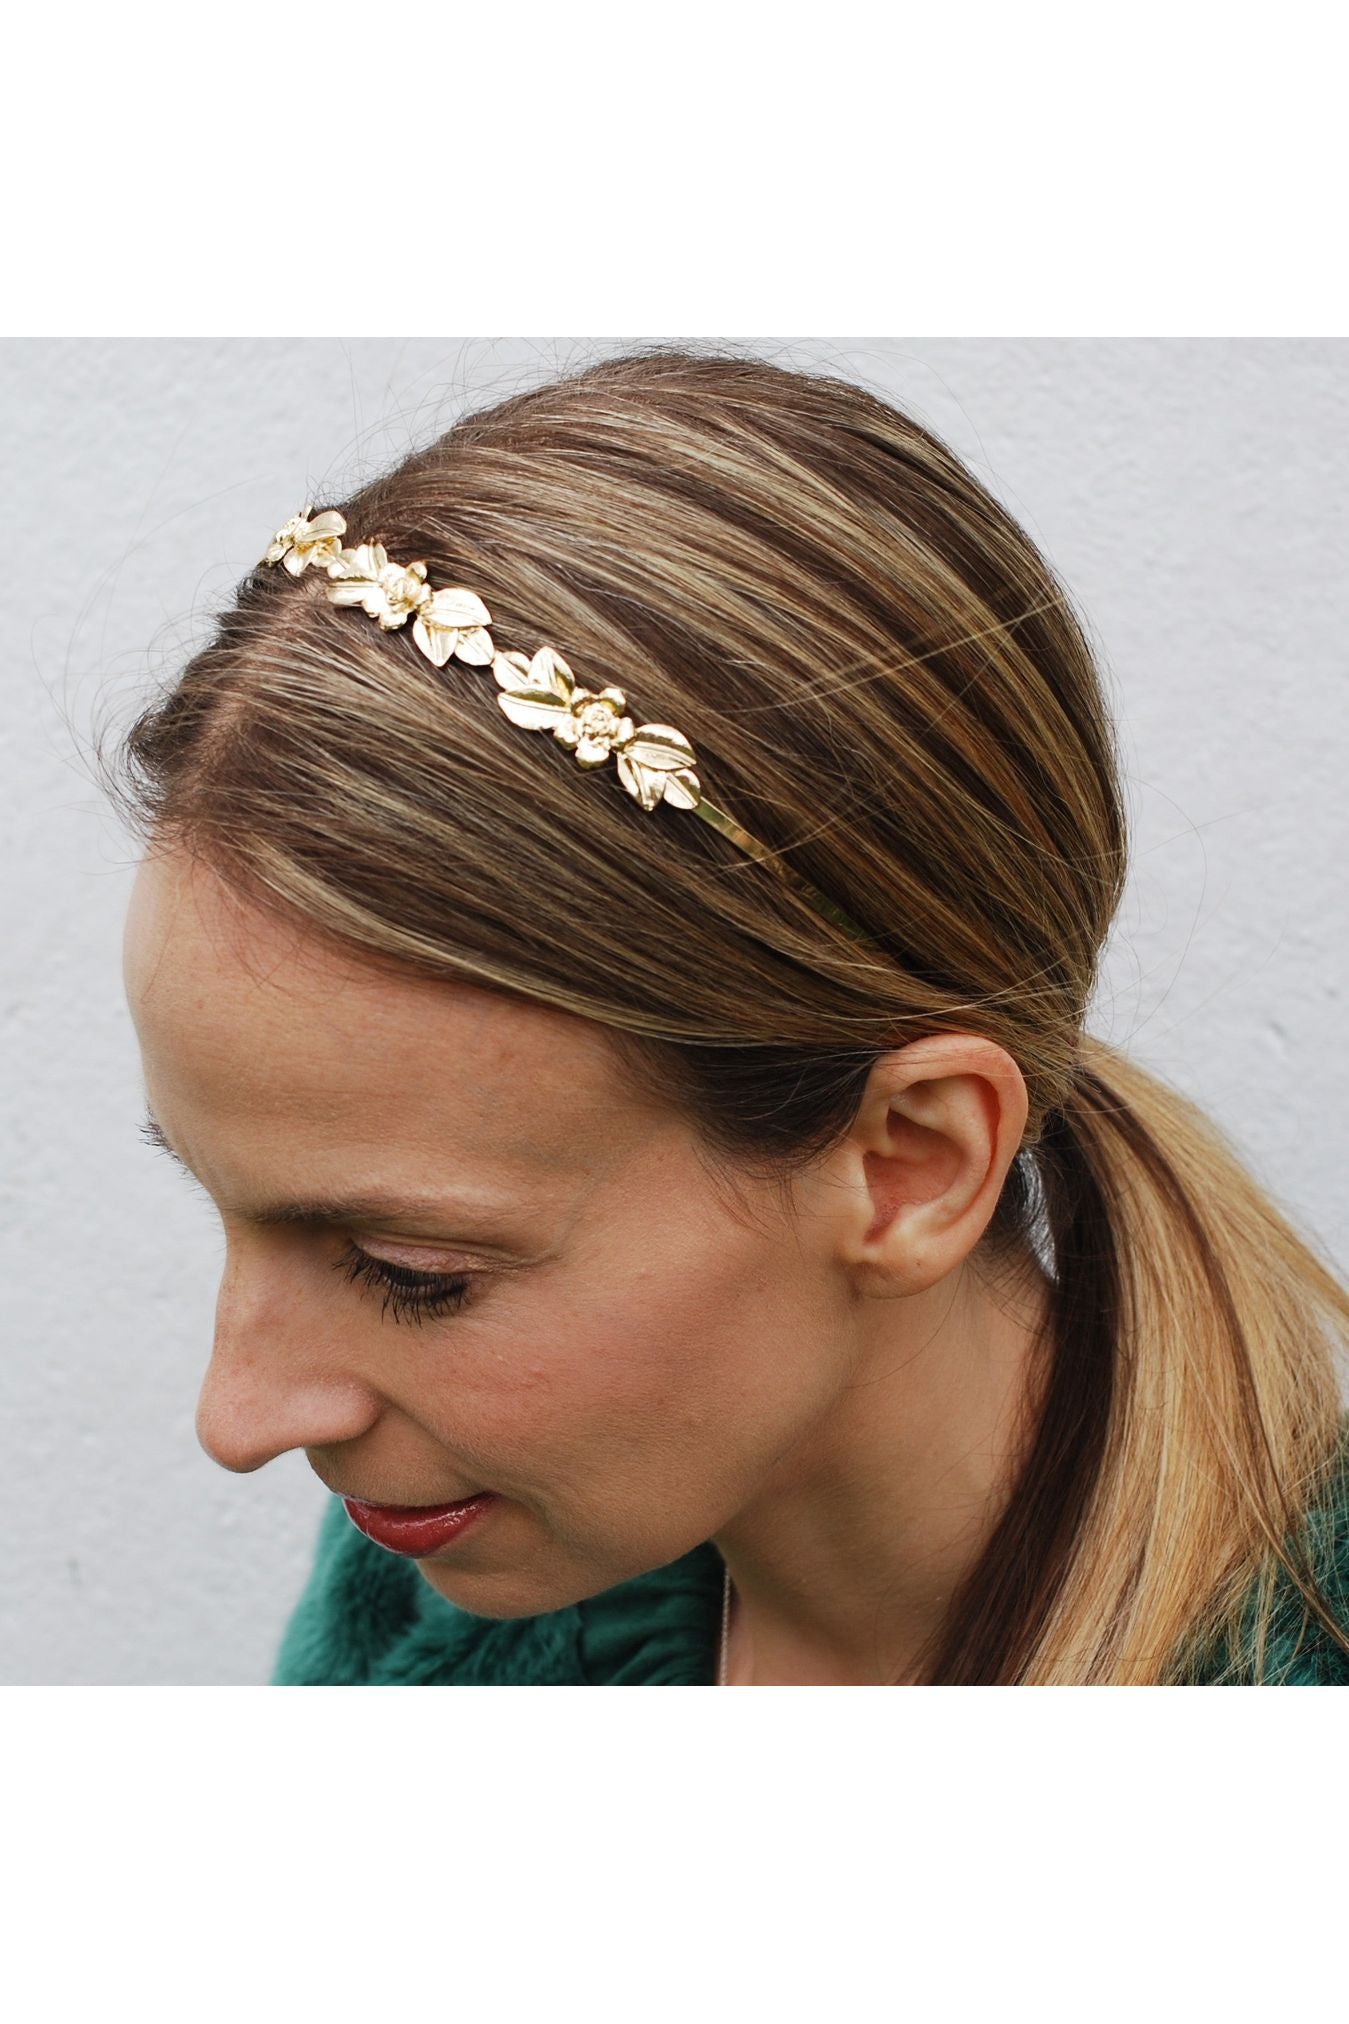 Flower Headband Wedding Hair Accessory Silver Hairband Gold Alice Band alice_flowers-gold